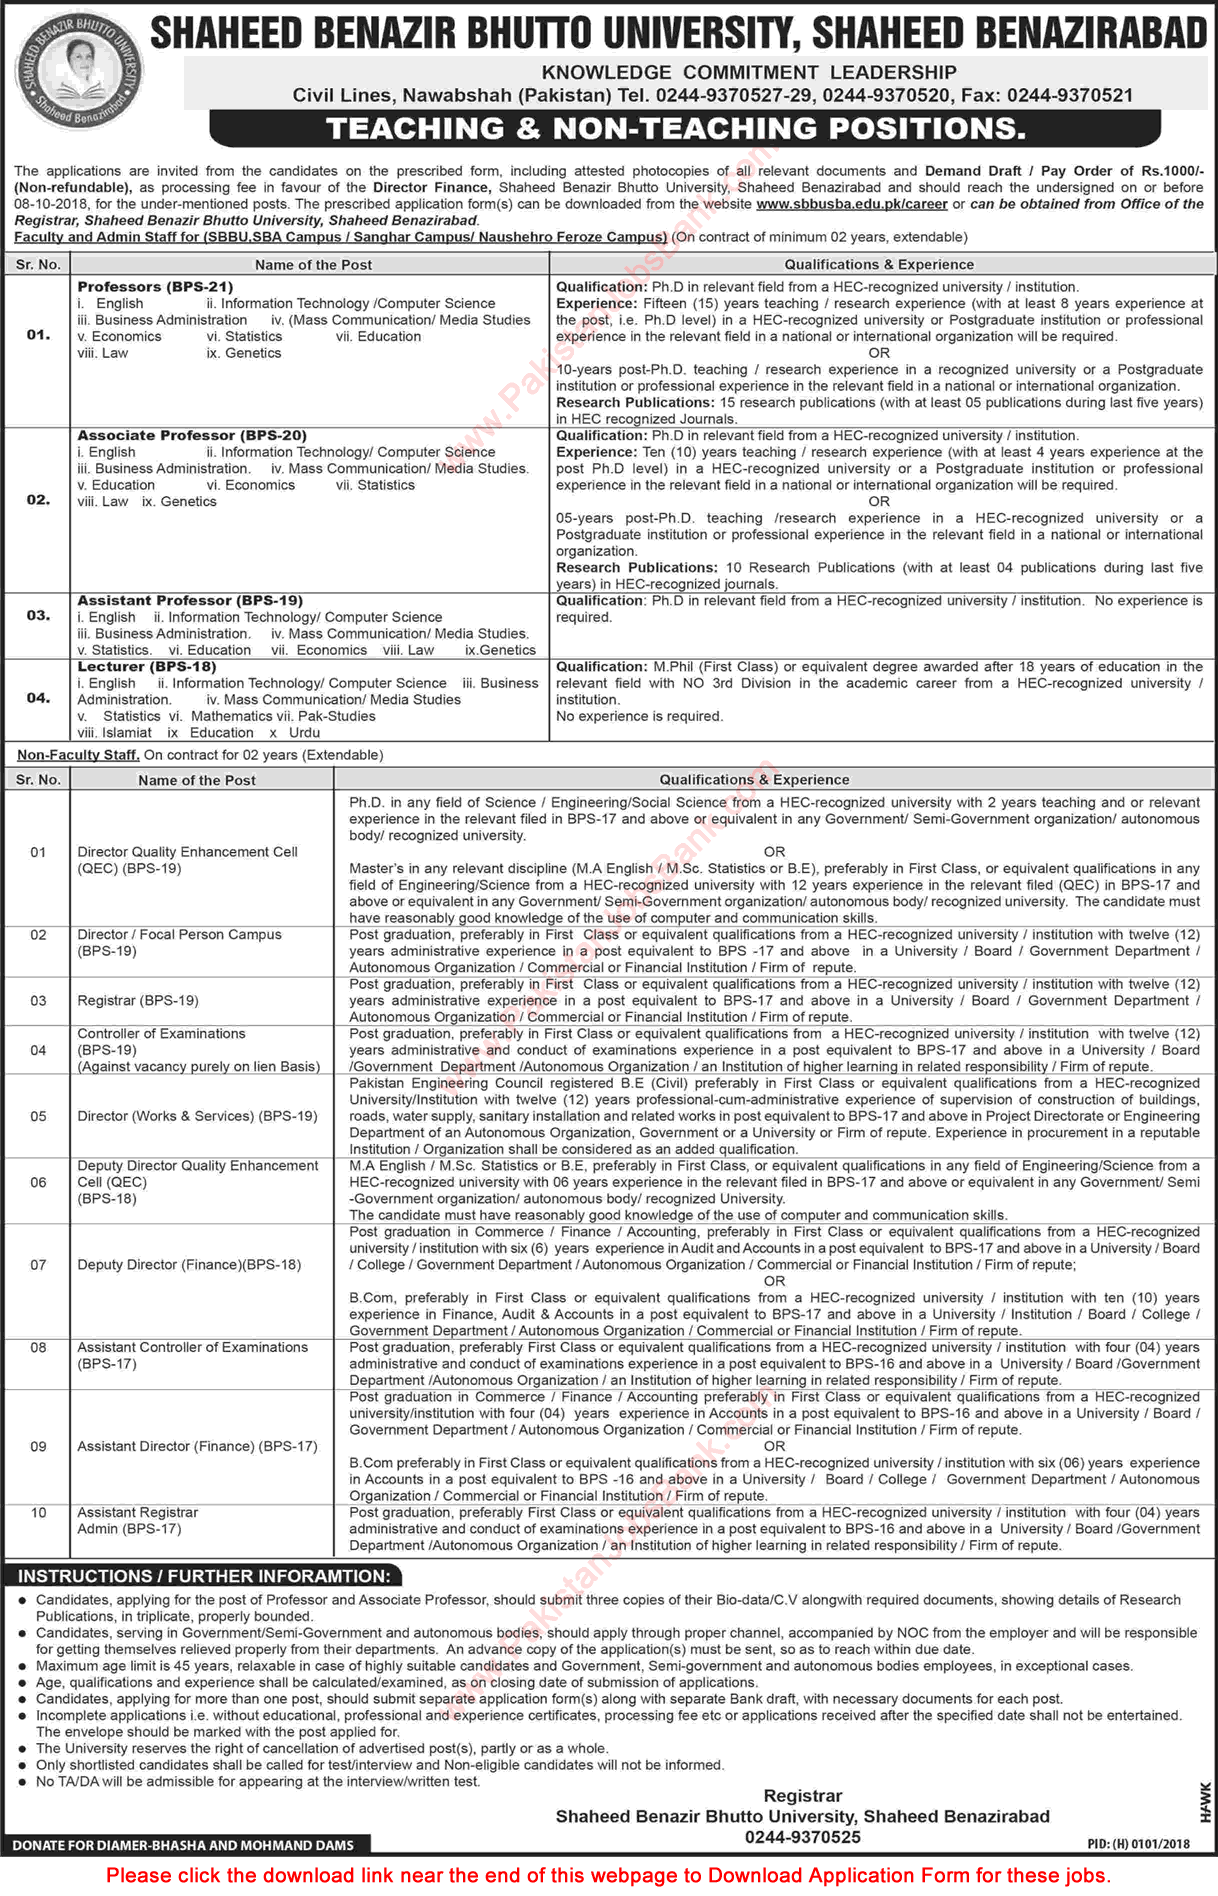 Shaheed Benazir Bhutto University Shaheed Benazirabad Jobs September 2018 Application Form Latest